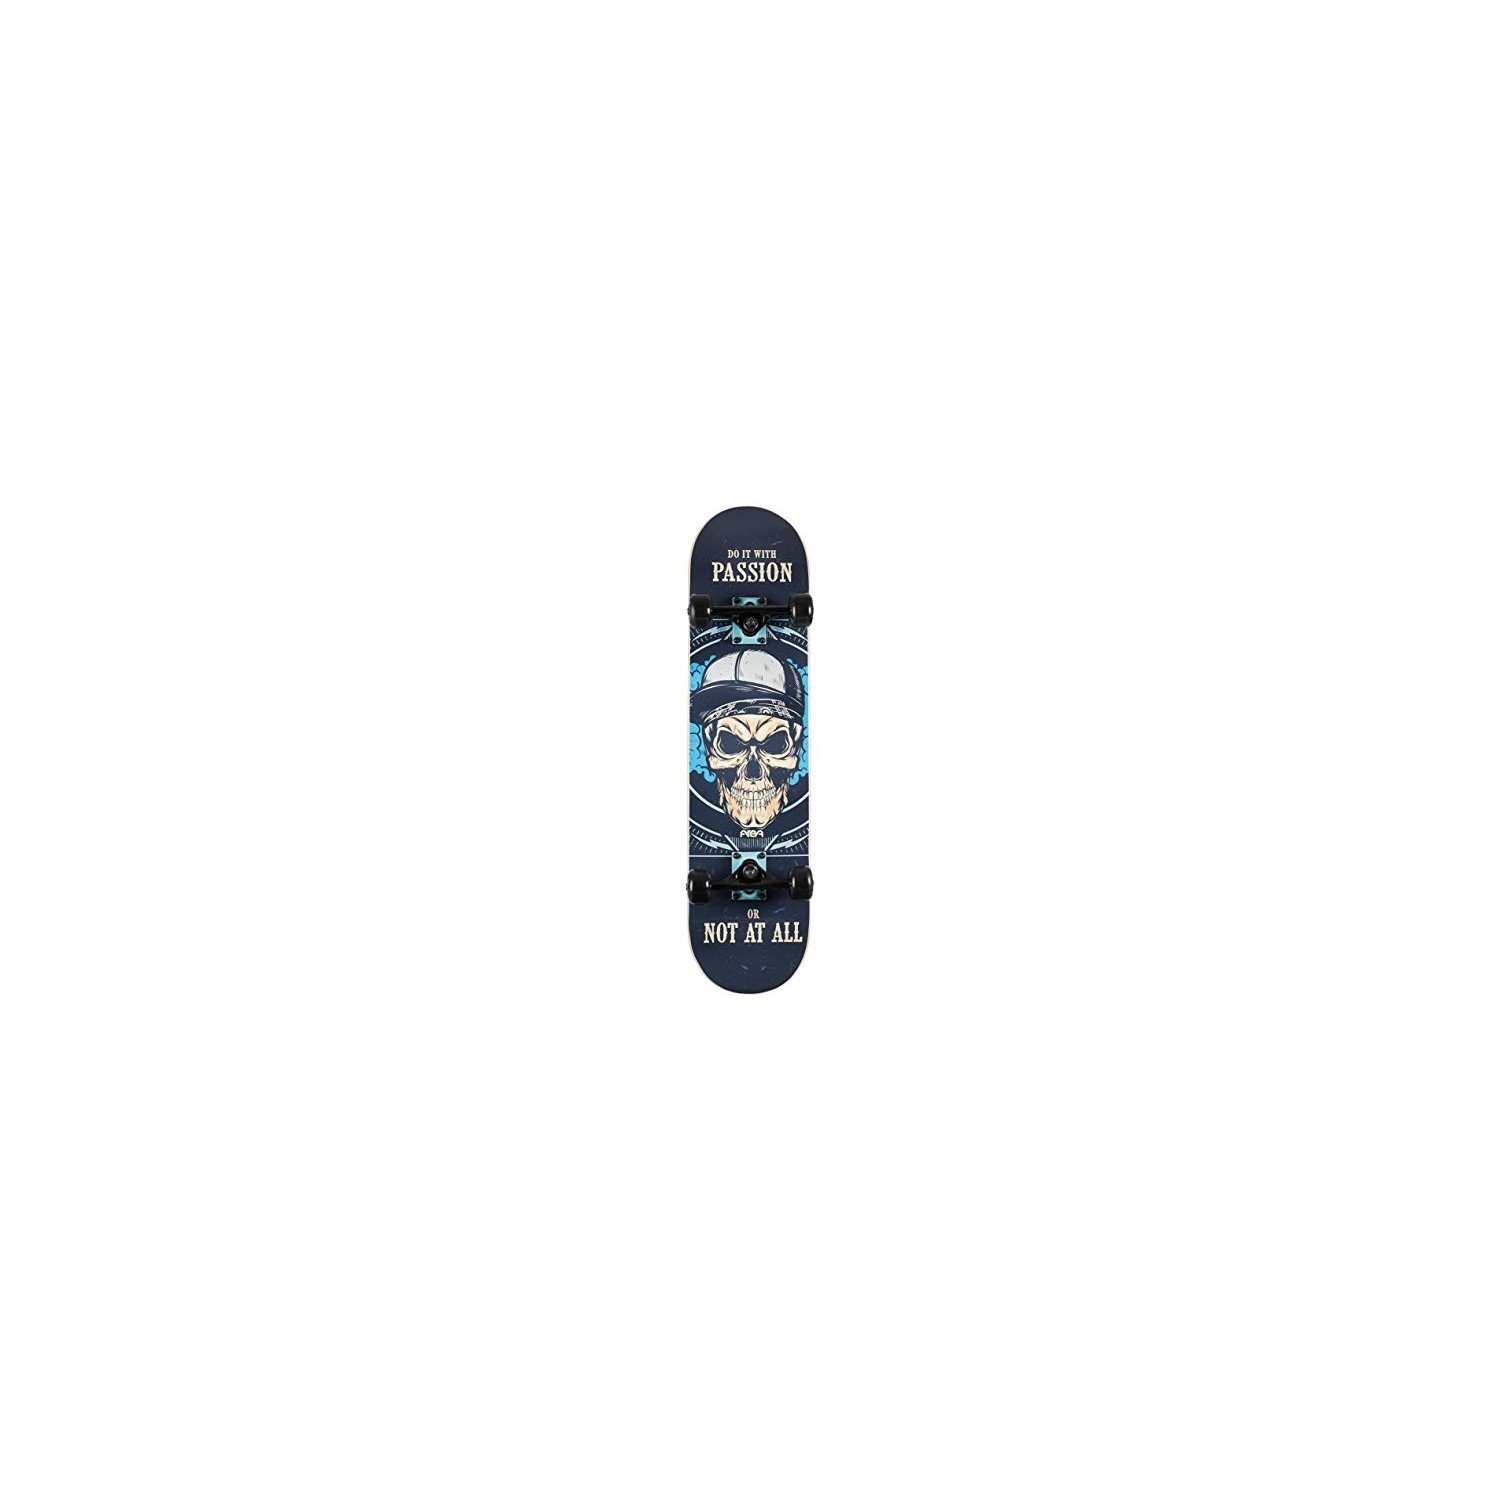 AREA17 Skateboard Skateboard - - / Passion Skateboard 000 -